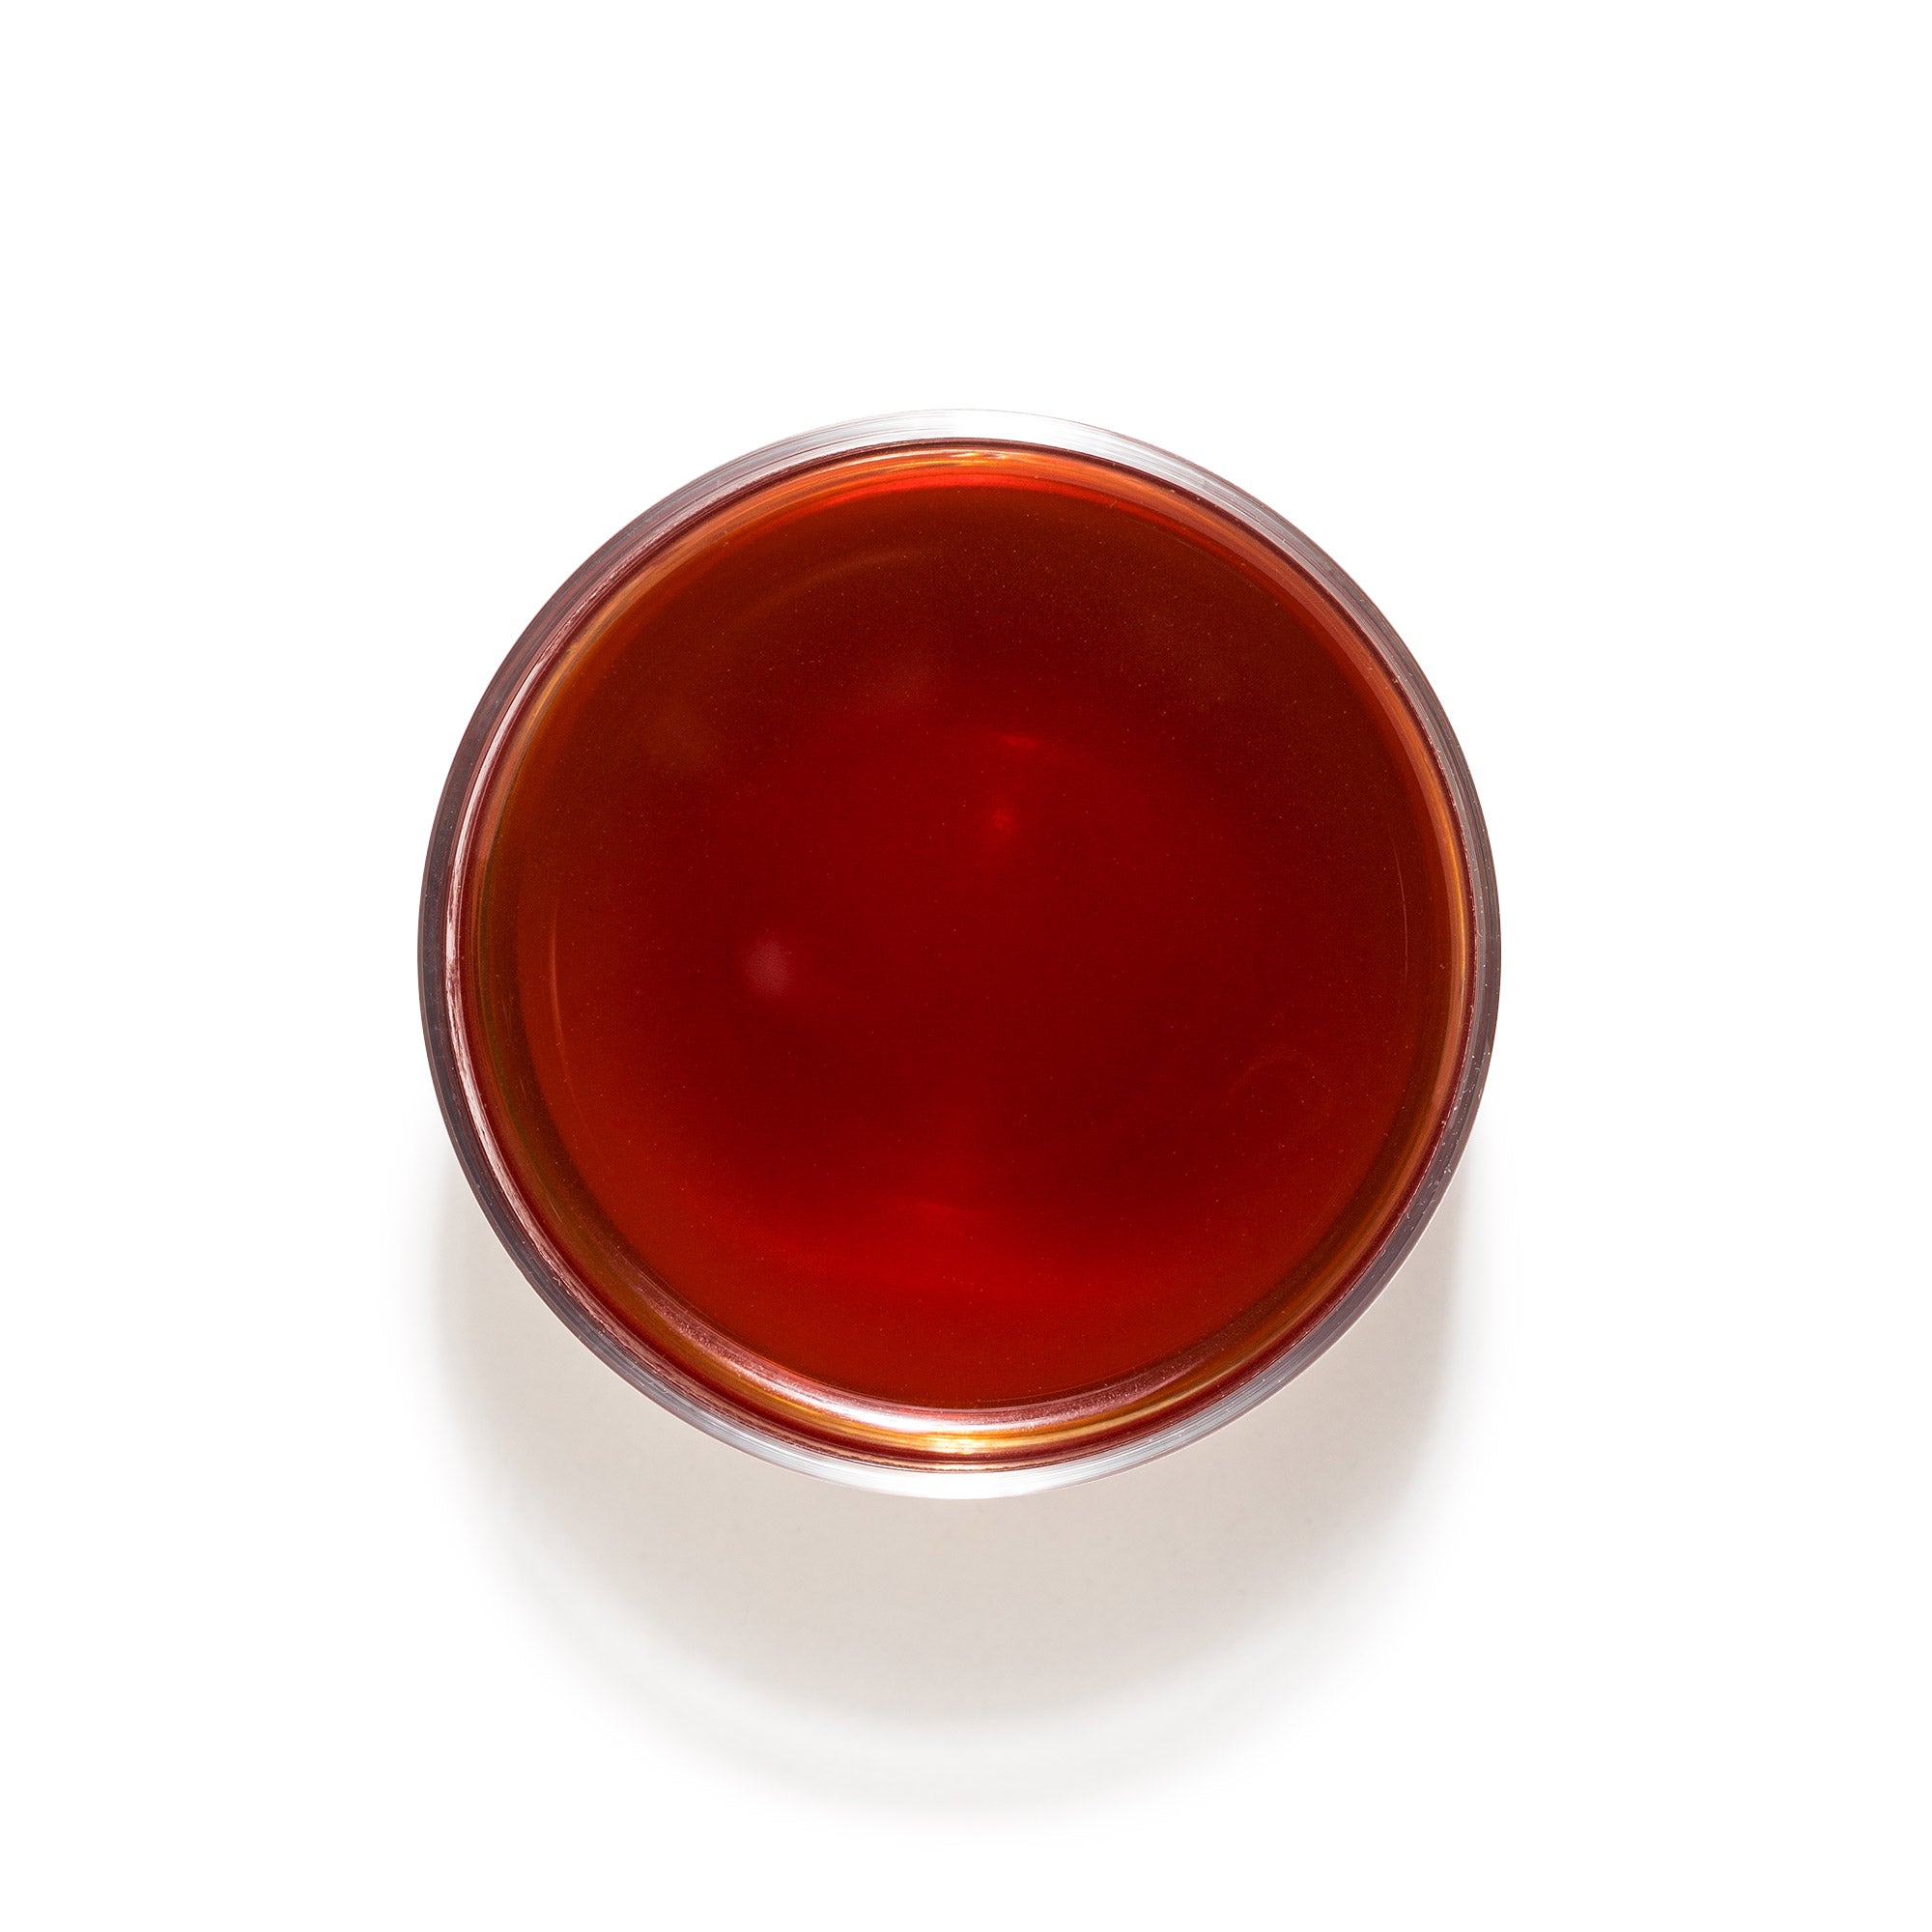 Clover Energy Yerba Mate + Rhodiola brewed tea in a glass mug, adaptogenic herbs